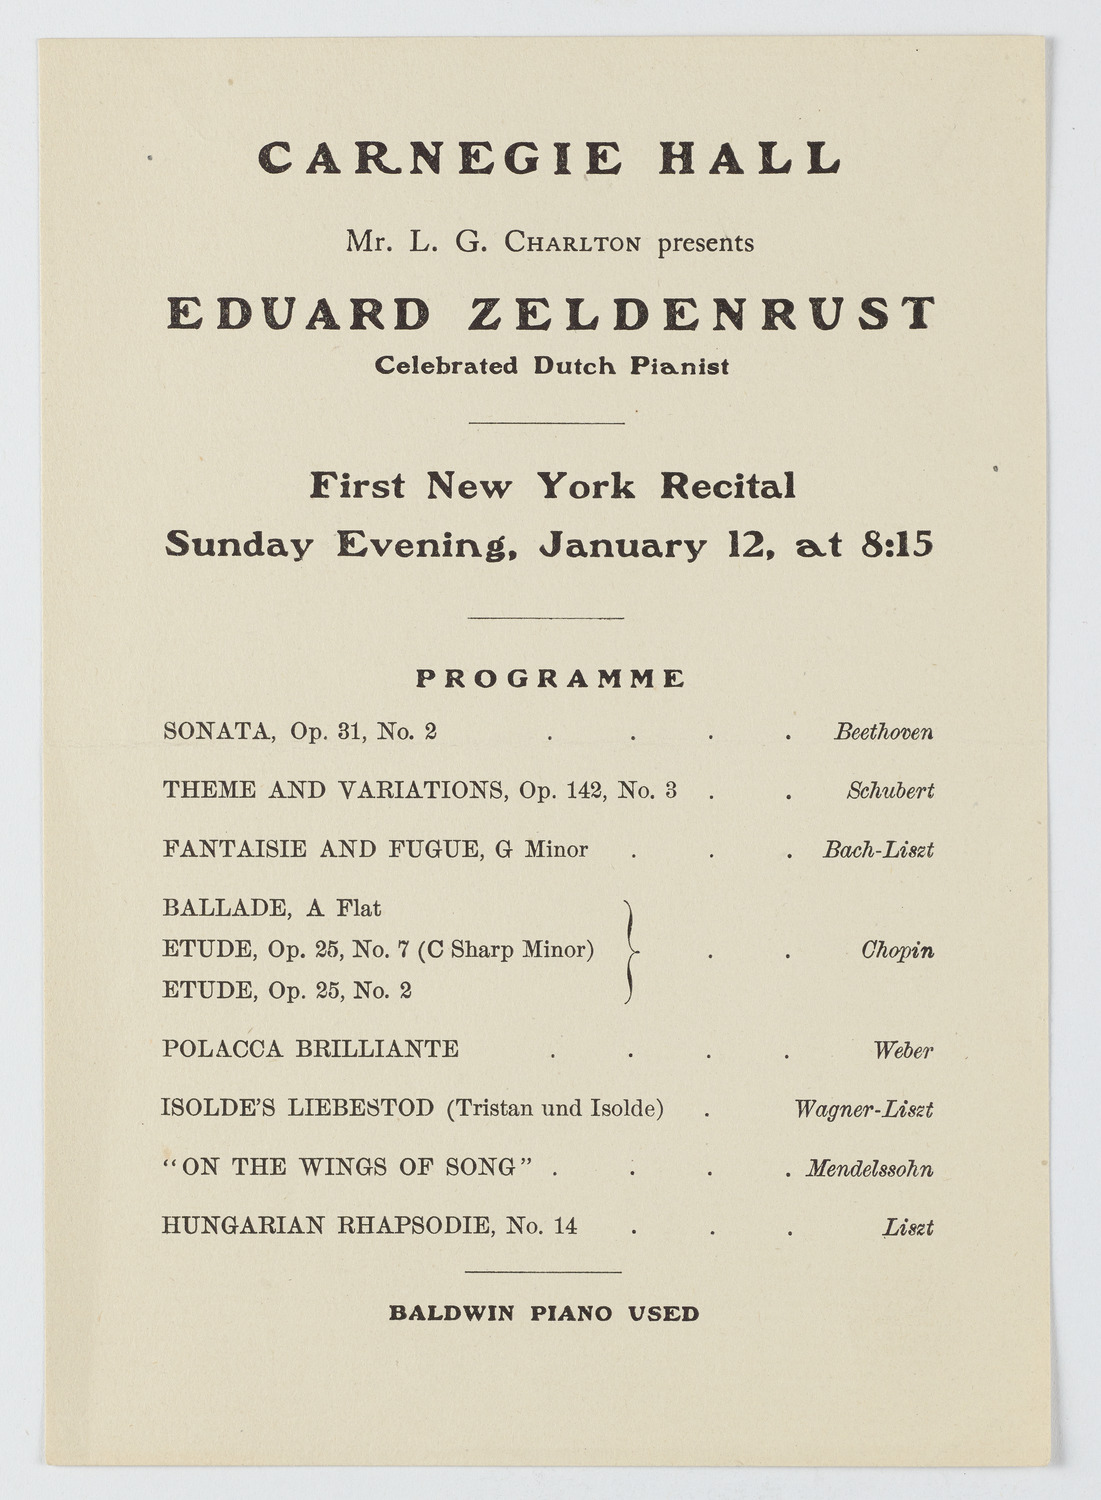 Eduard Zeldenrust, January 12, 1902